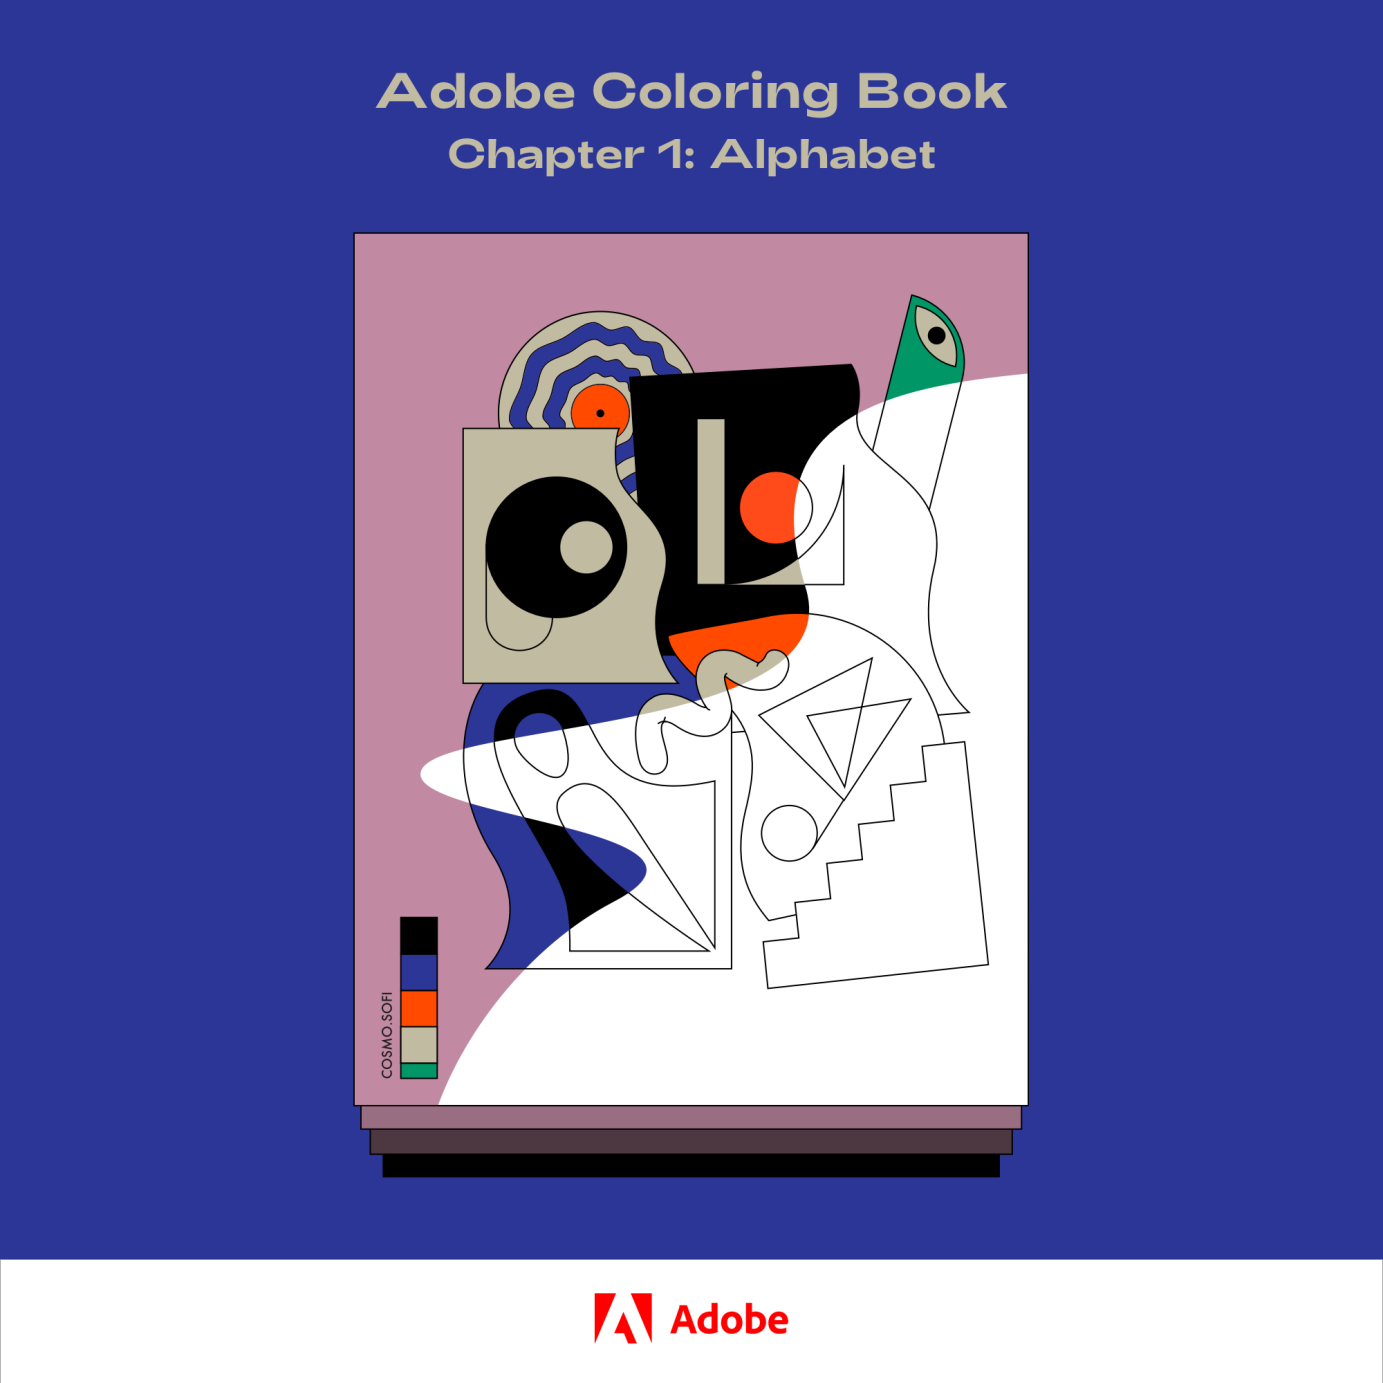 Adobe Coloring Book